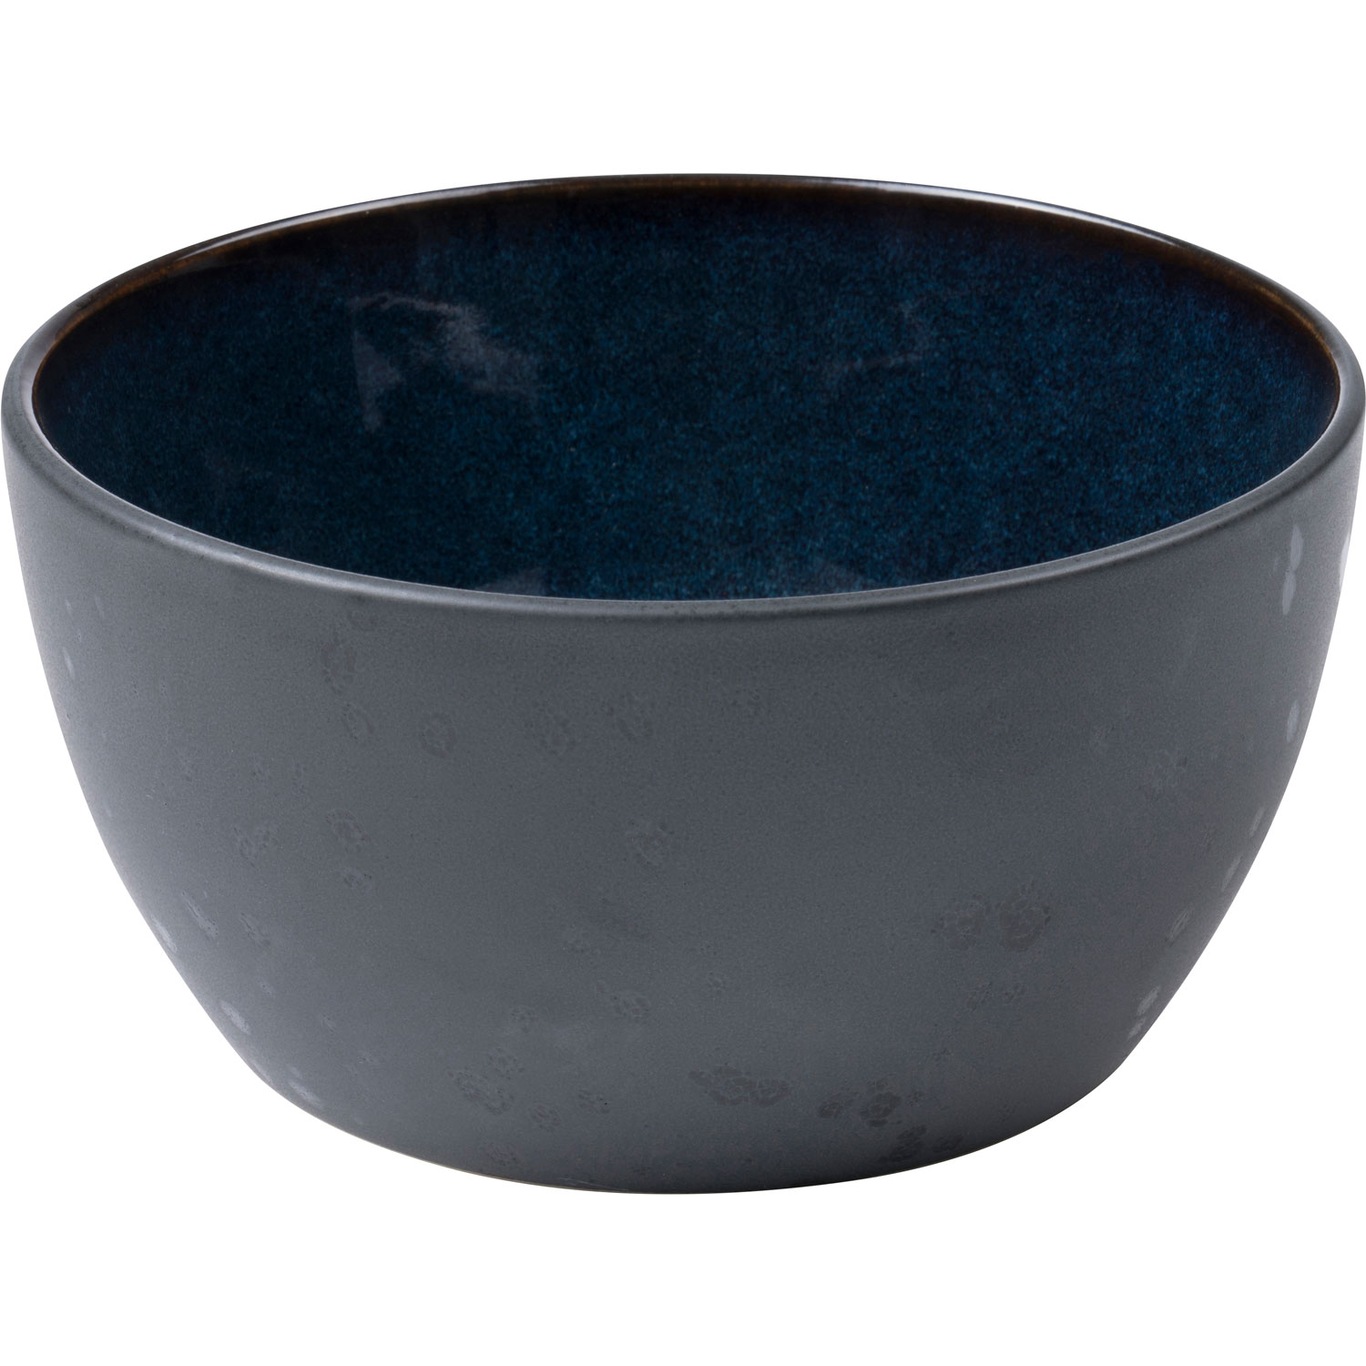 Bitz Bowl 14 cm, Black/Dark Blue